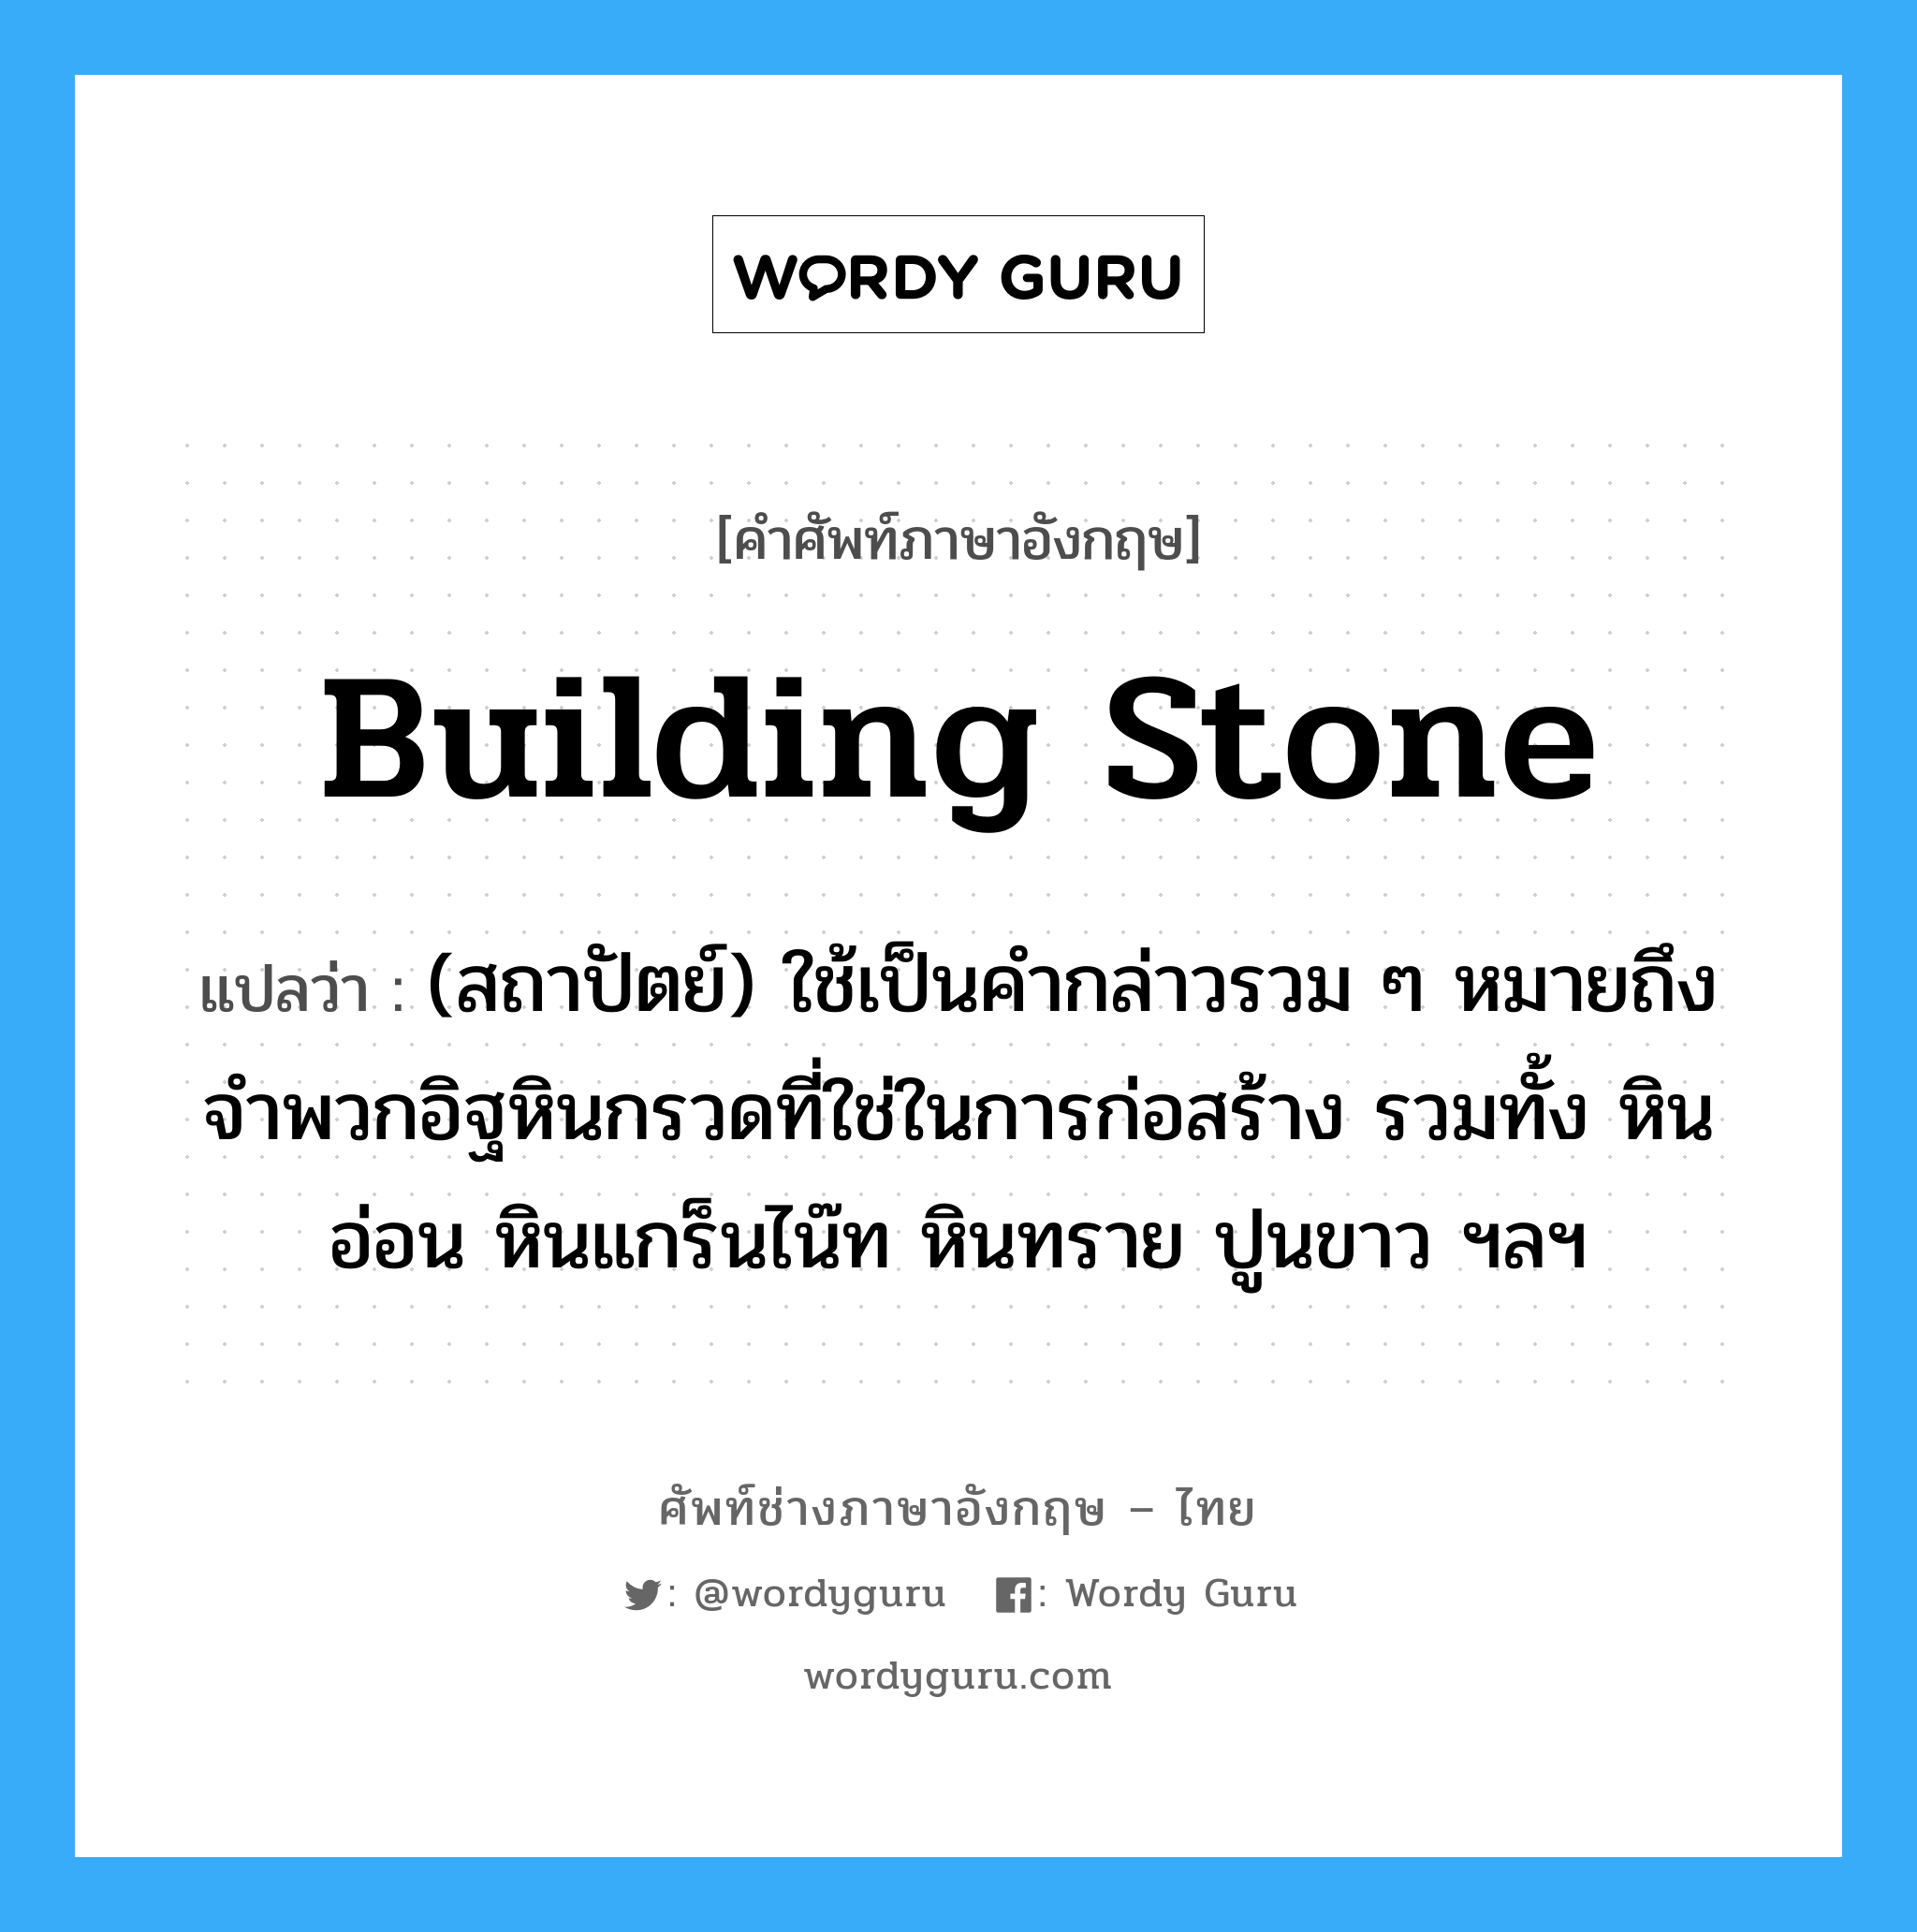 building stone แปลว่า?, คำศัพท์ช่างภาษาอังกฤษ - ไทย building stone คำศัพท์ภาษาอังกฤษ building stone แปลว่า (สถาปัตย์) ใช้เป็นคำกล่าวรวม ๆ หมายถึงจำพวกอิฐหินกรวดที่ใช่ในการก่อสร้าง รวมทั้ง หินอ่อน หินแกร็นไน๊ท หินทราย ปูนขาว ฯลฯ